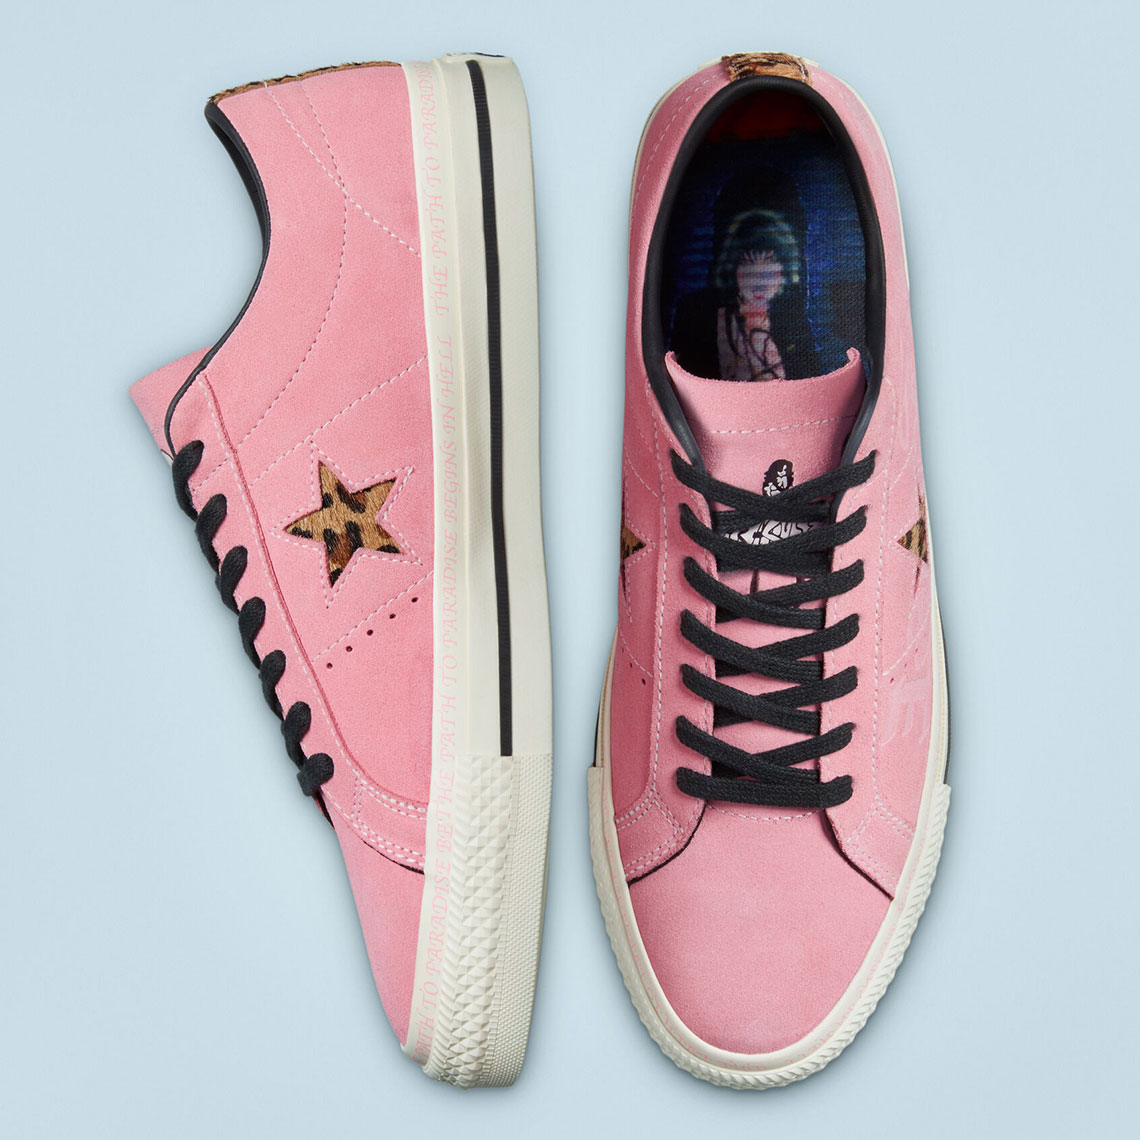 Sean Pablo x Converse Pro Leather slip-on sneakers Black Pro 90s Pink Black Egret 171325c 2